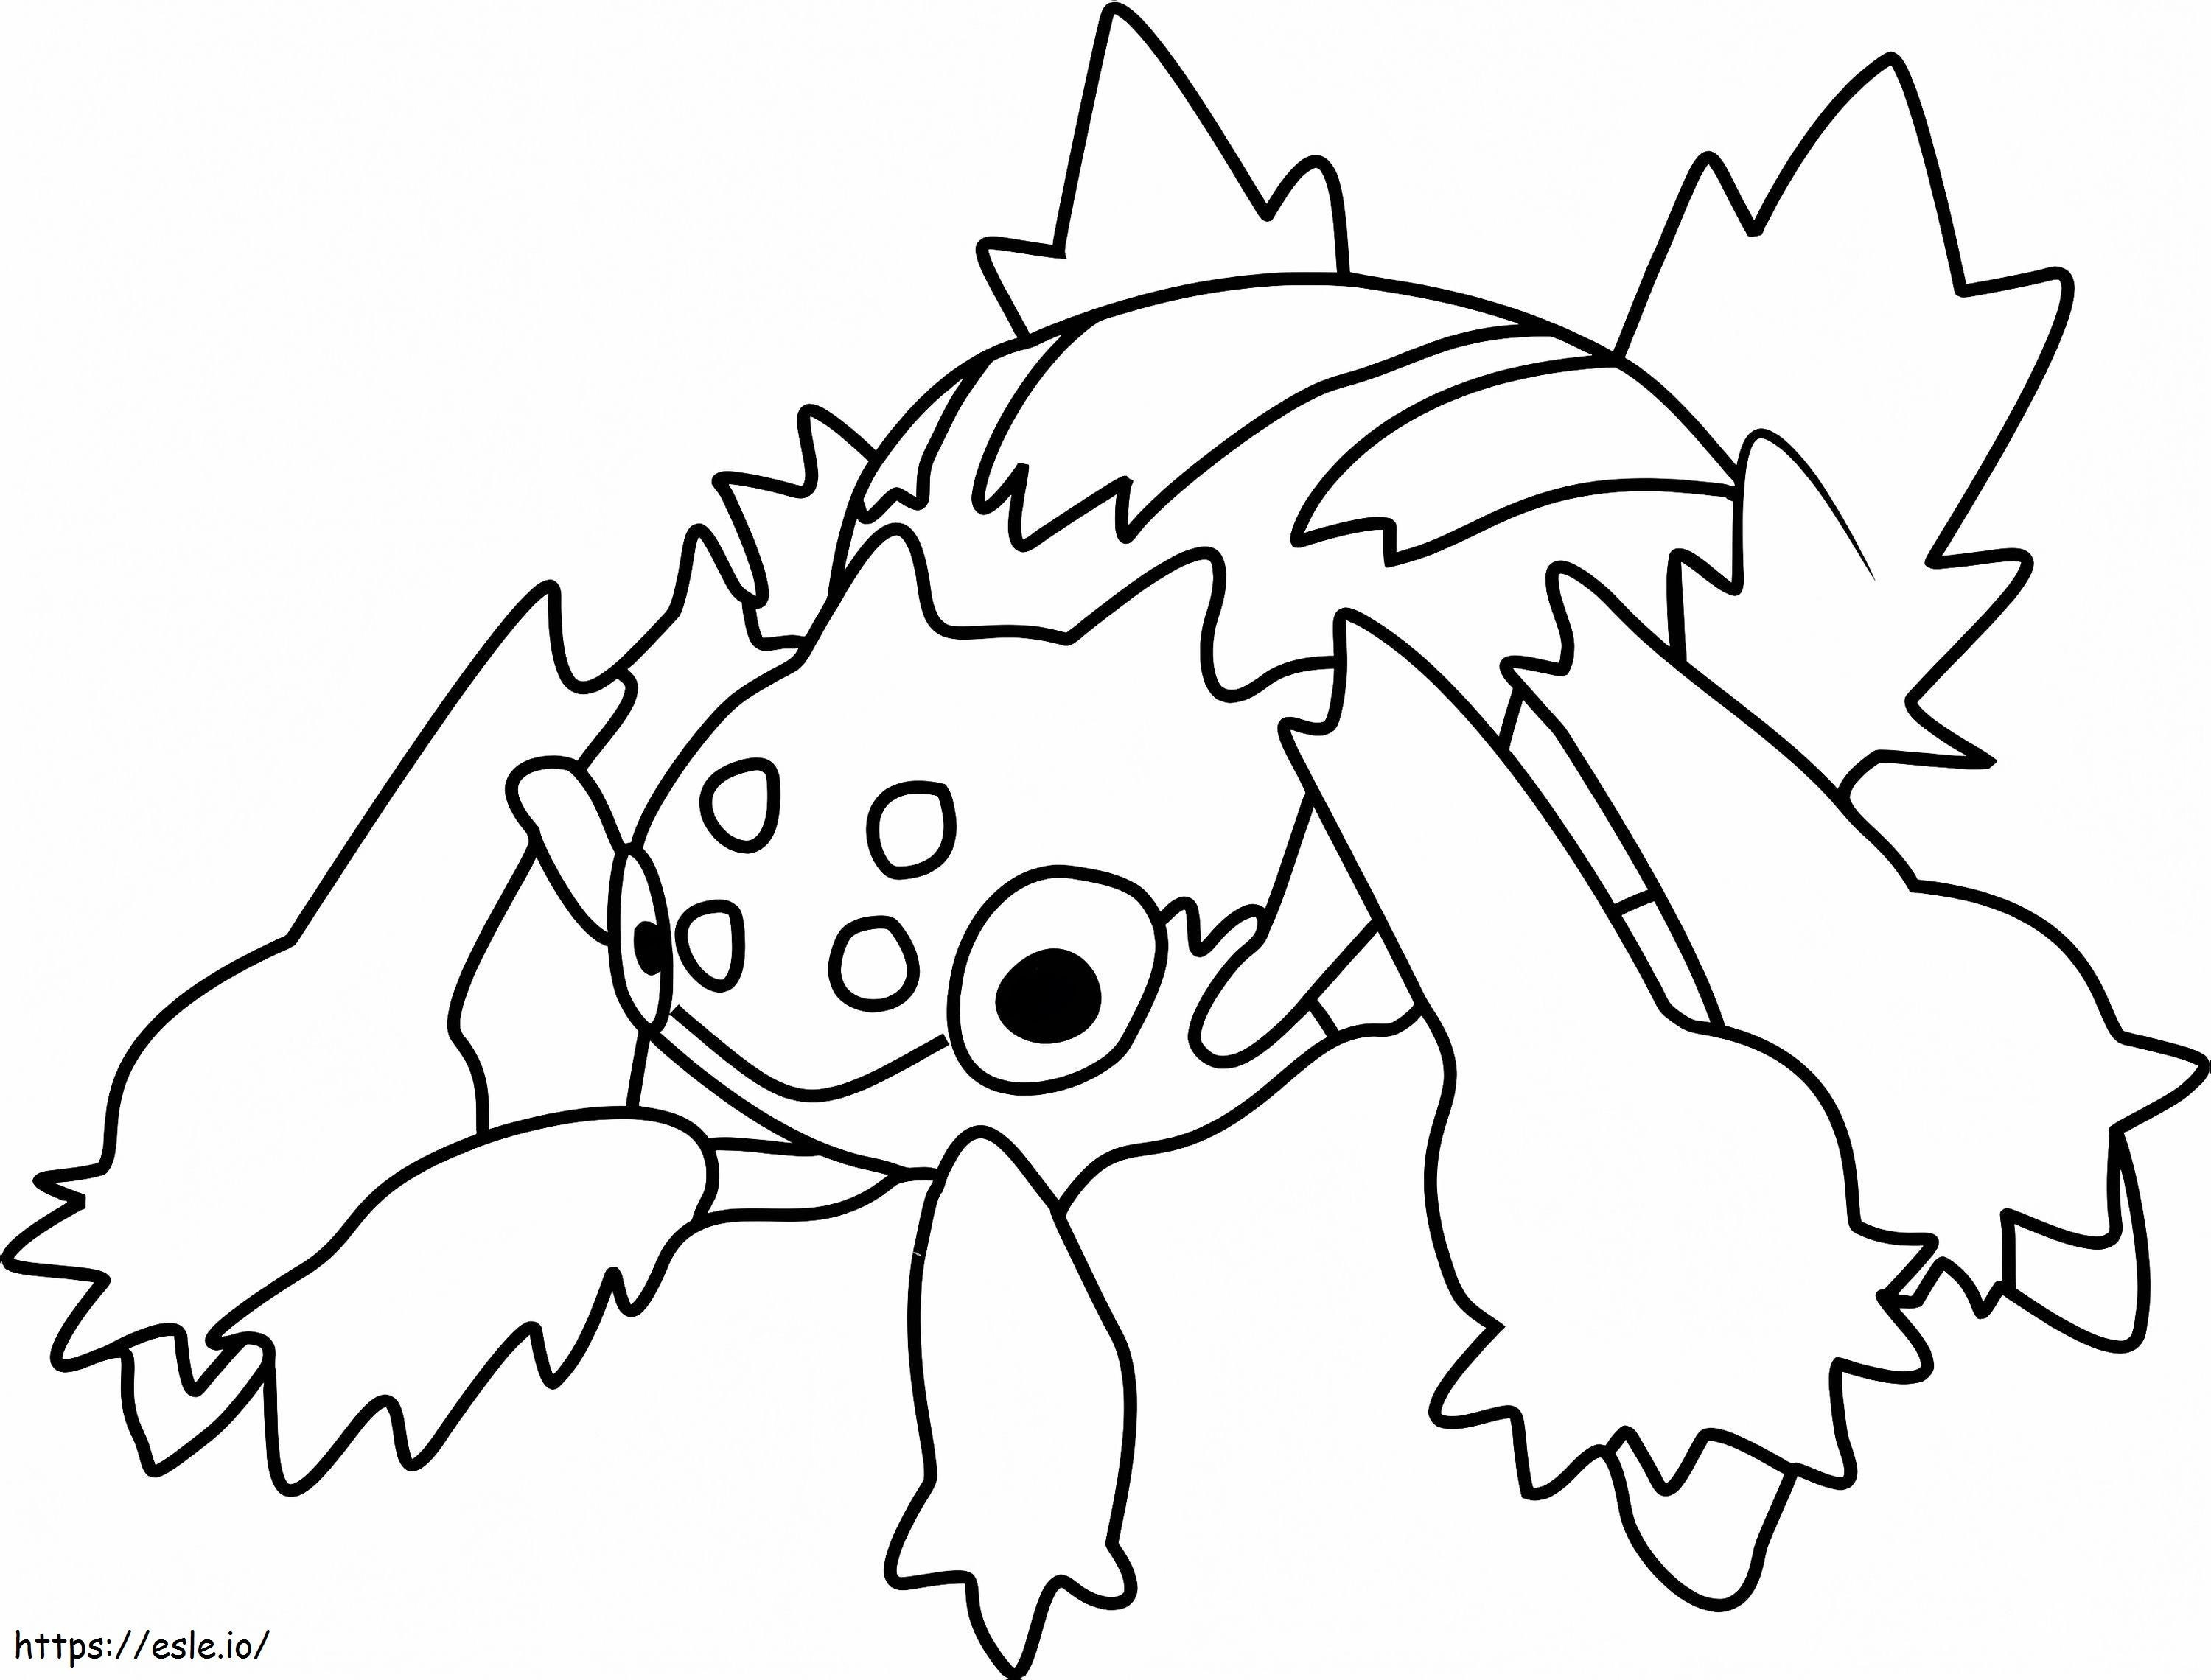 Coloriage Pokémon Galvantula Gen 5 à imprimer dessin